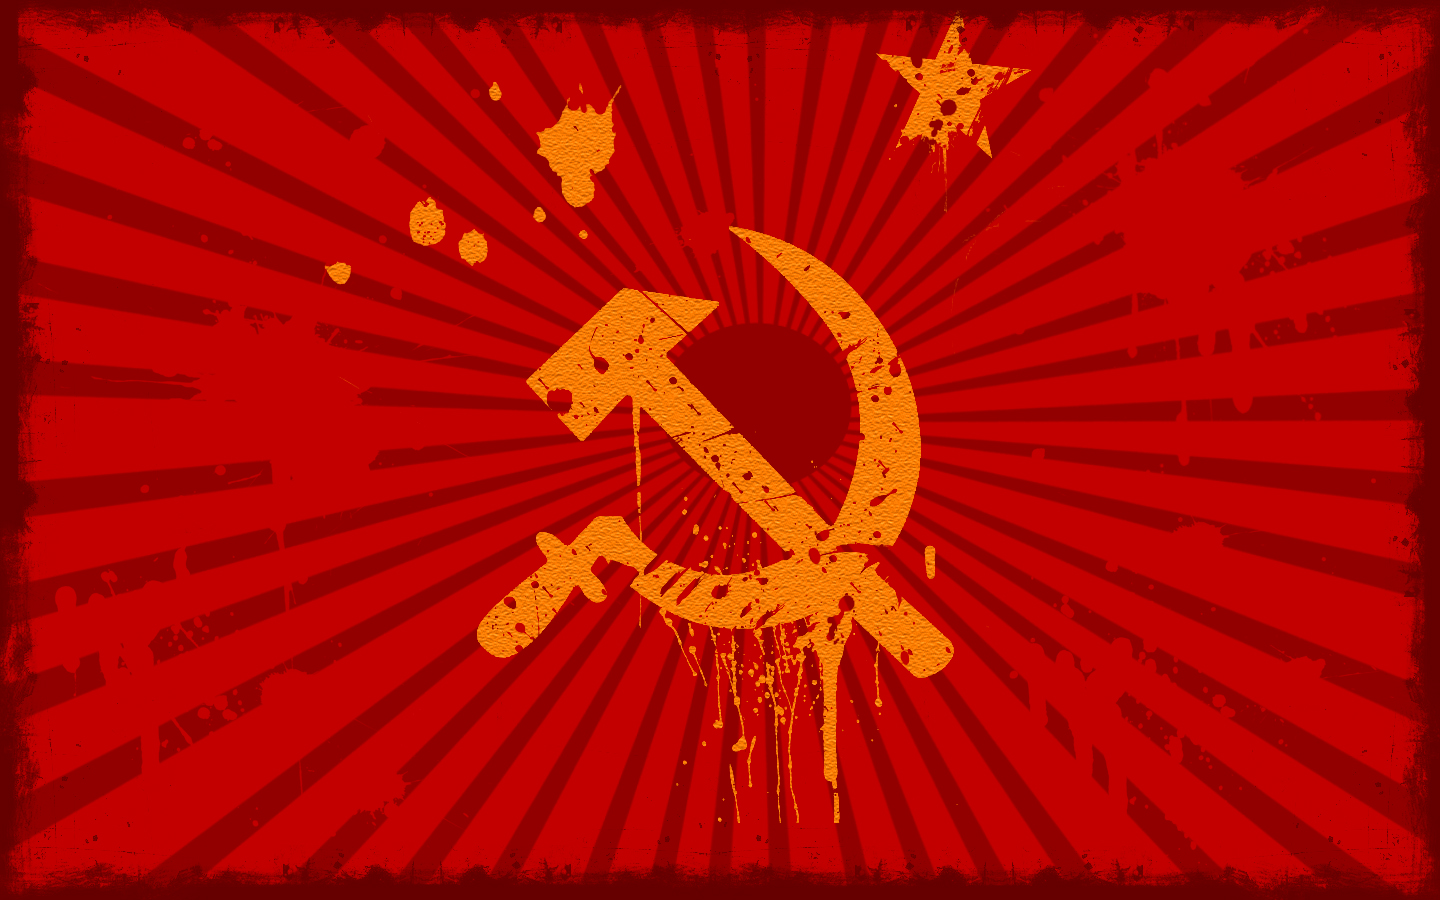 Soviet Grunge Wallpaper by Robin0999 on